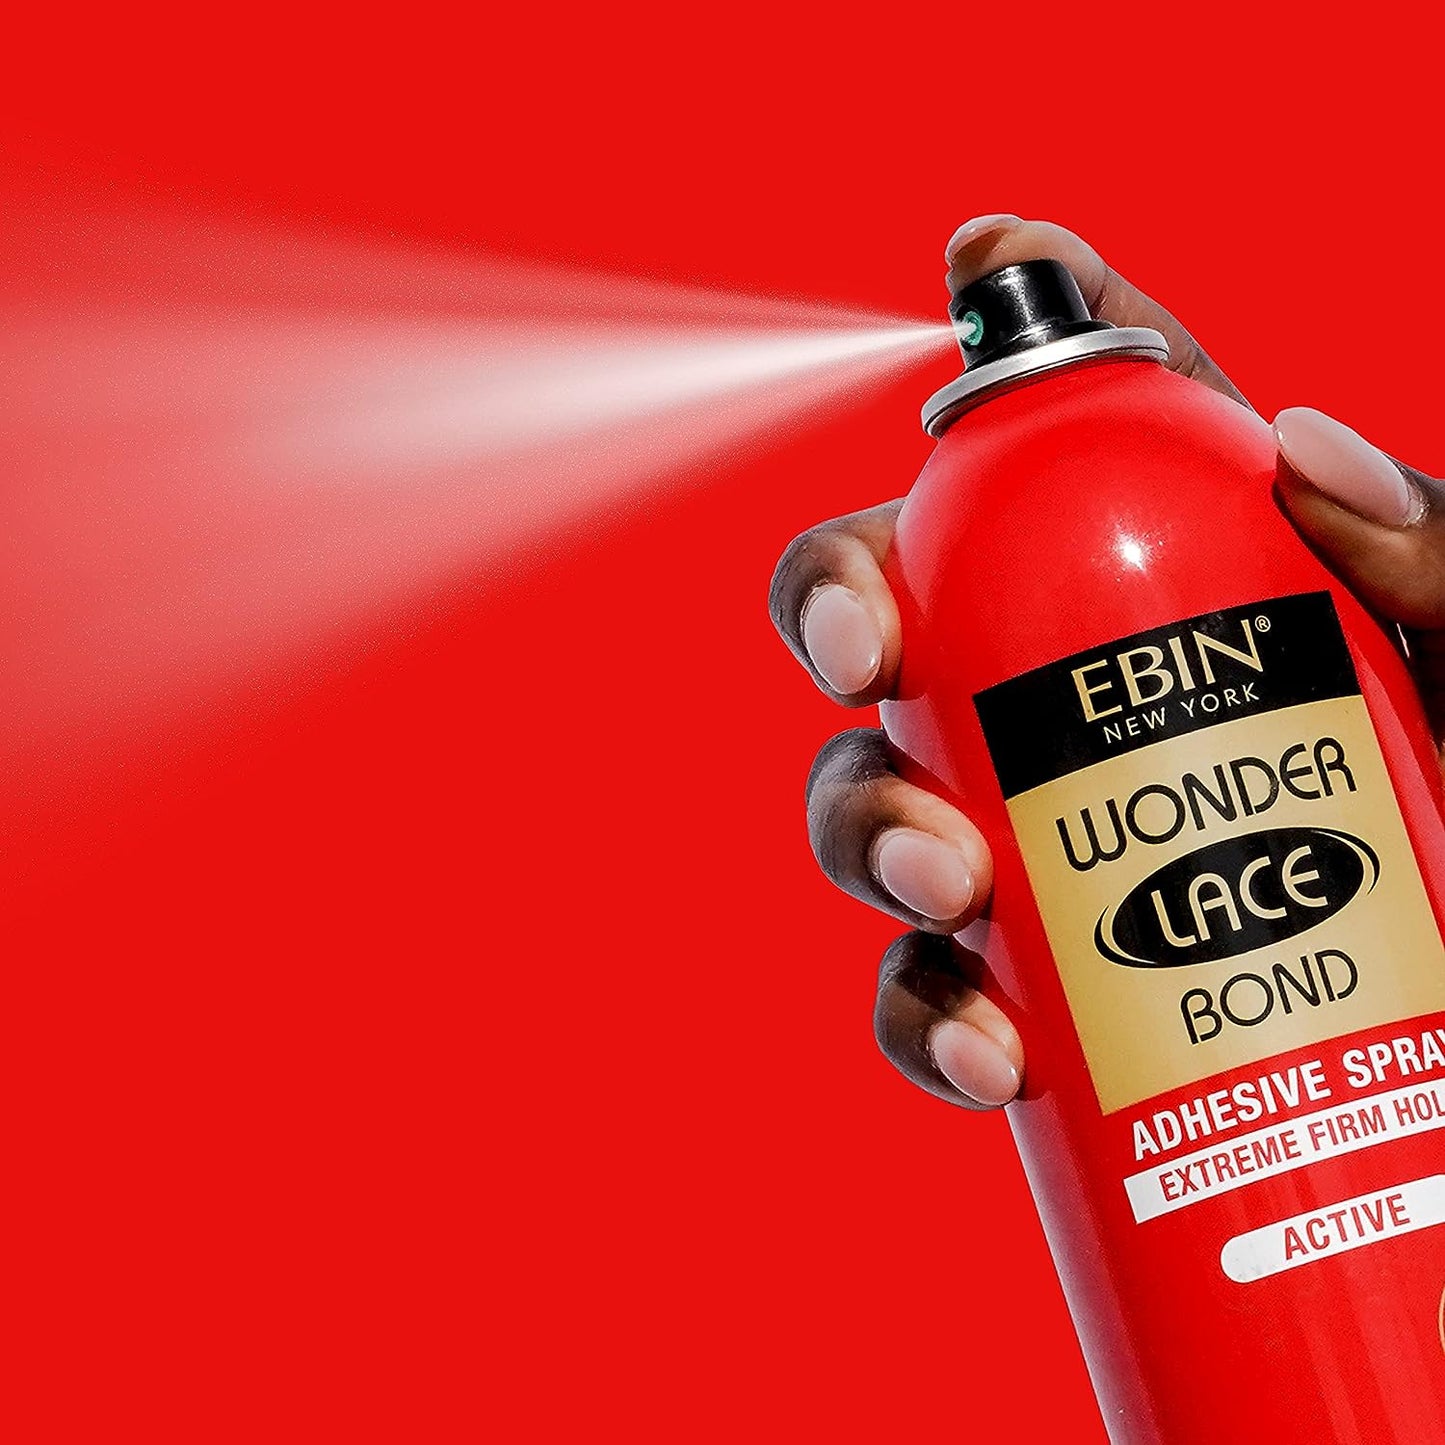 EBIN NEW YORK Wonder Lace Bond Adhesive Spray - Supreme (Extreme Firm Hold)